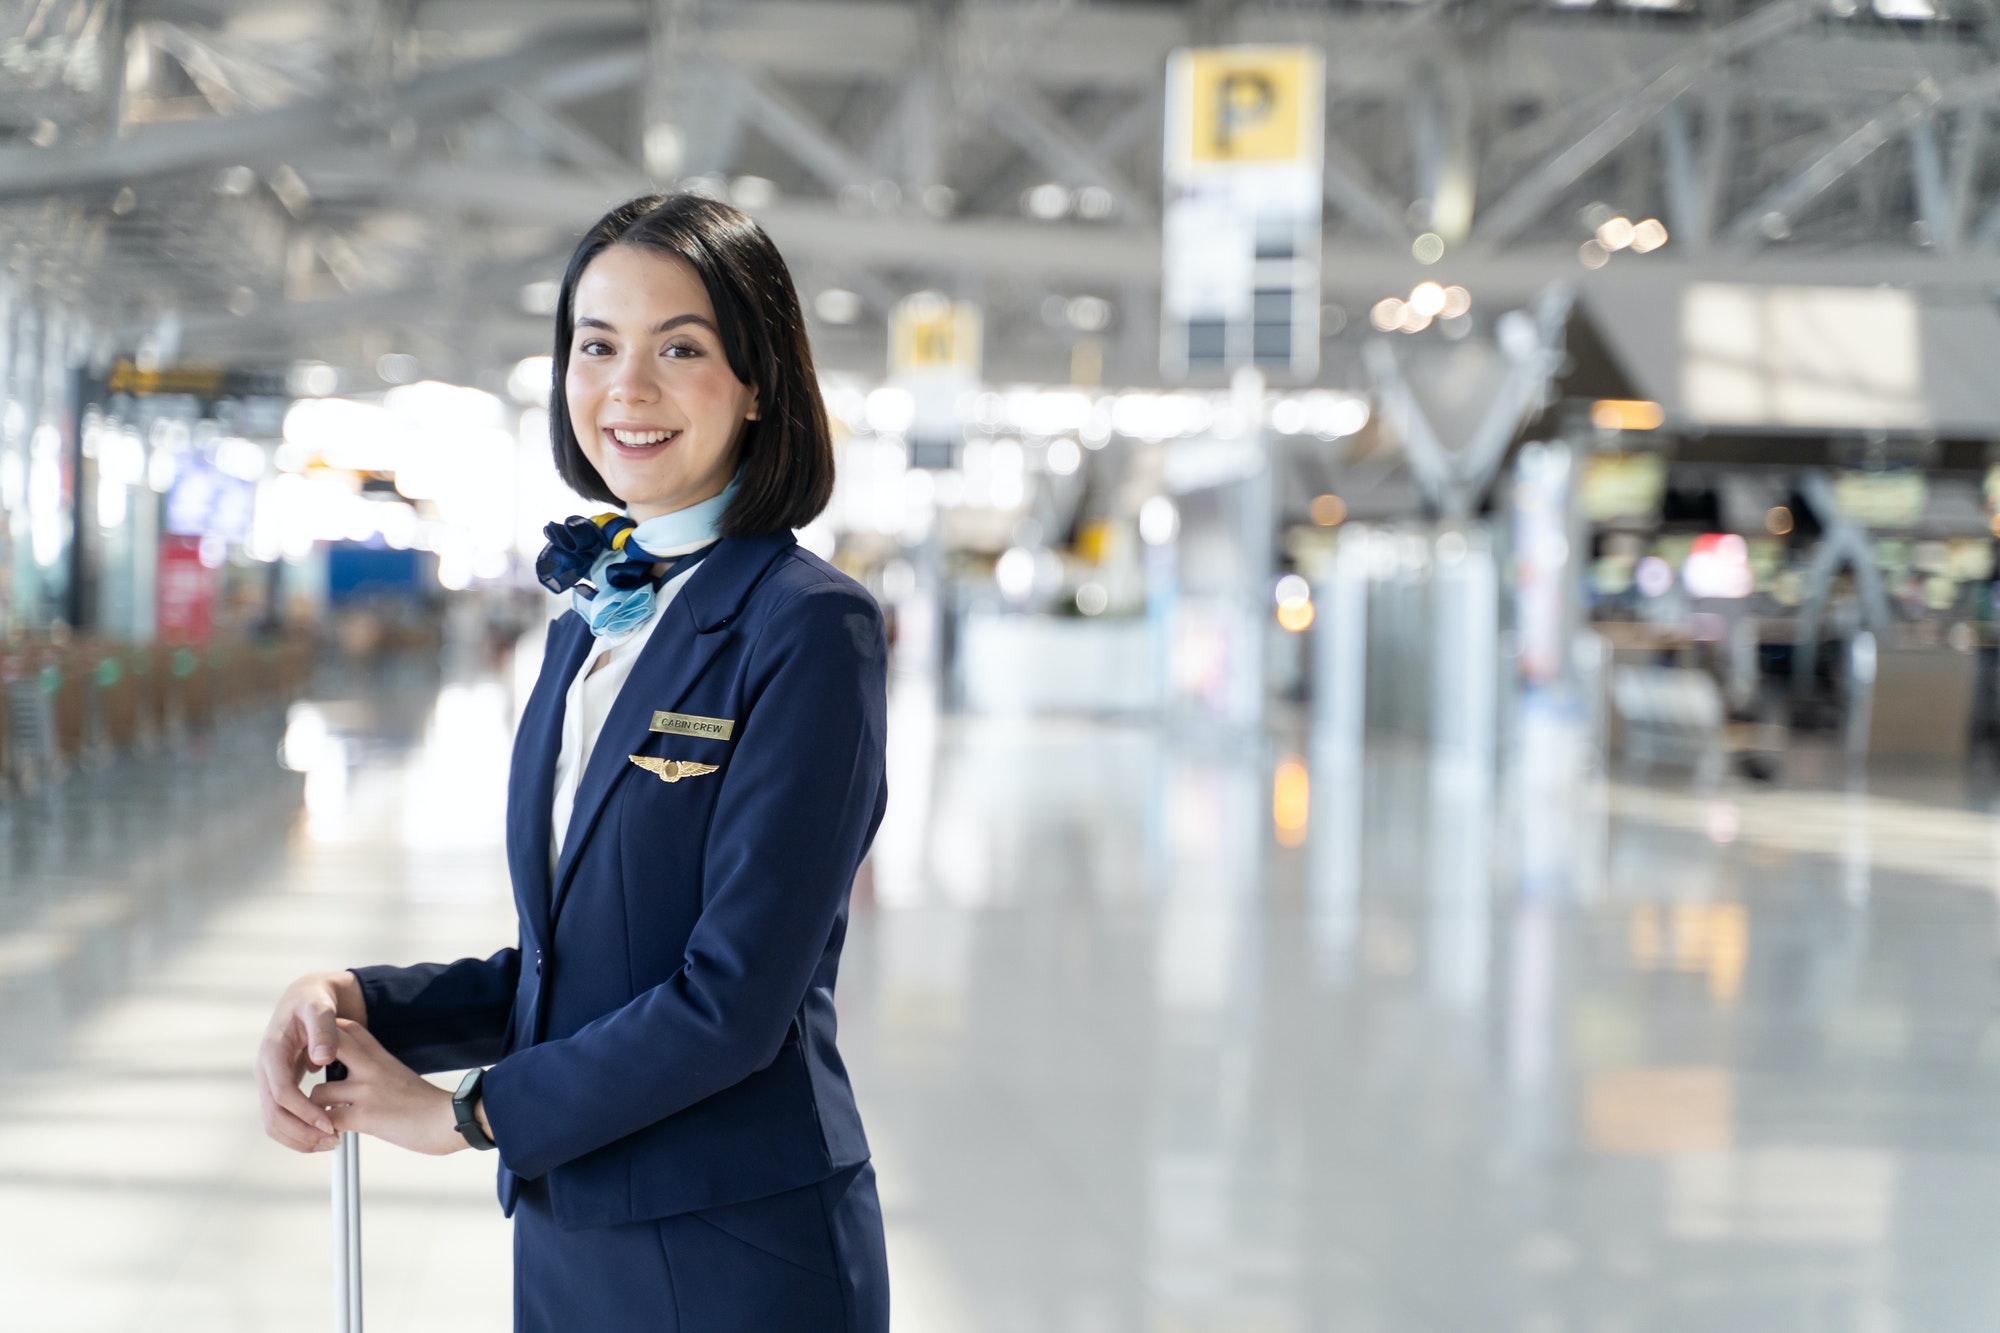 Portrait of Caucasian flight attendant standing in airport terminal.